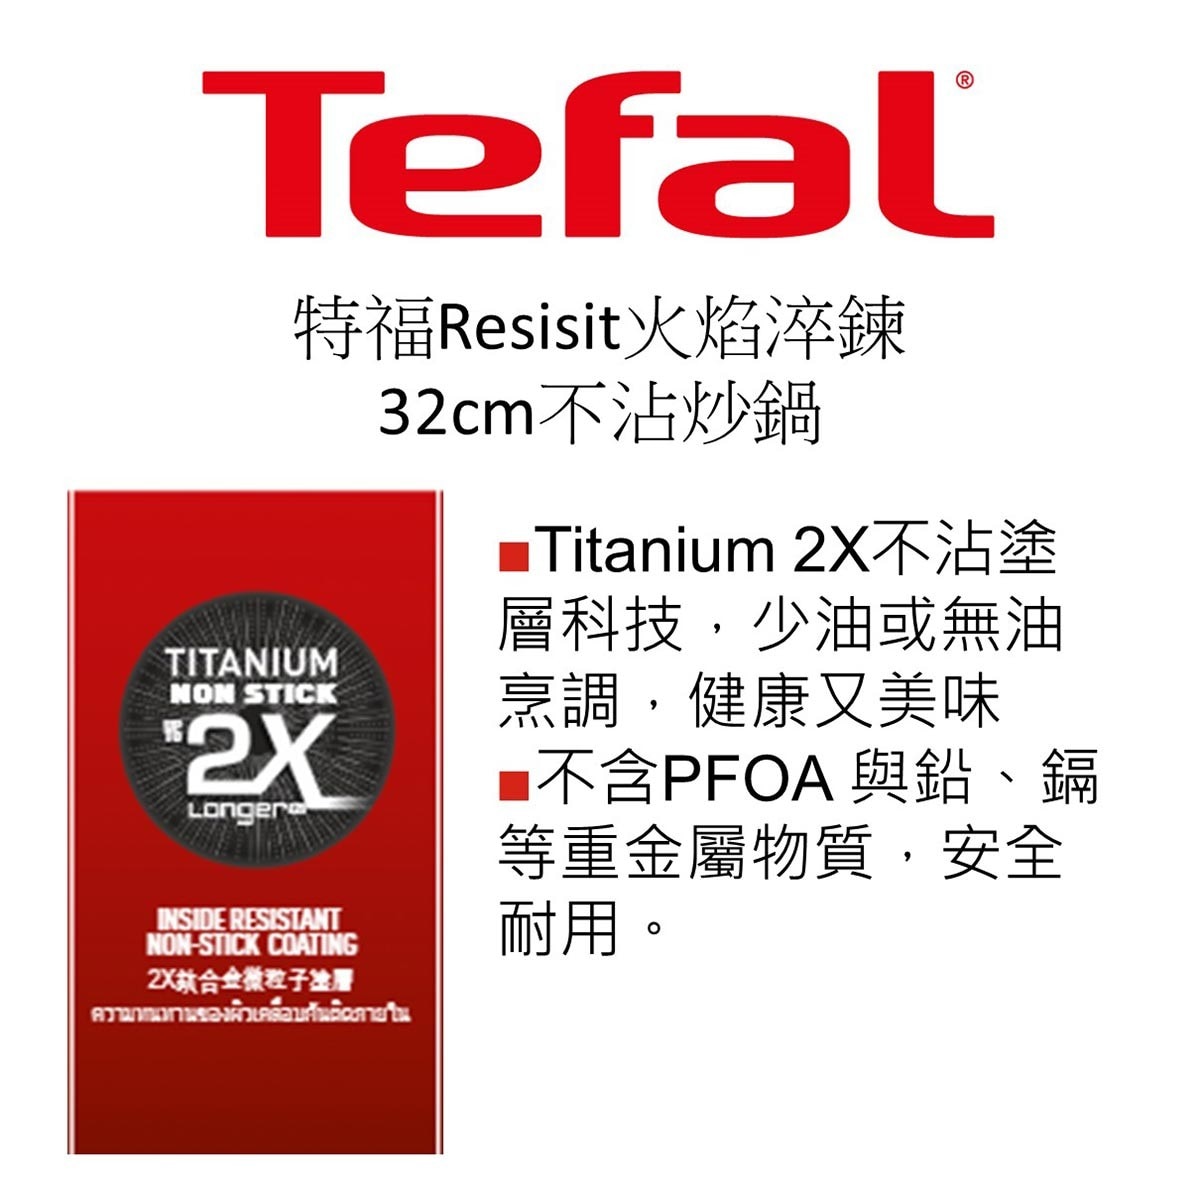 Tefal Resist 不沾炒鍋火焰淬煉系列 32公分含蓋，兩倍TITANIUM不沾塗層，法國特福加溫紅心，鍋底耐火抗高溫，熱能感應顯示。